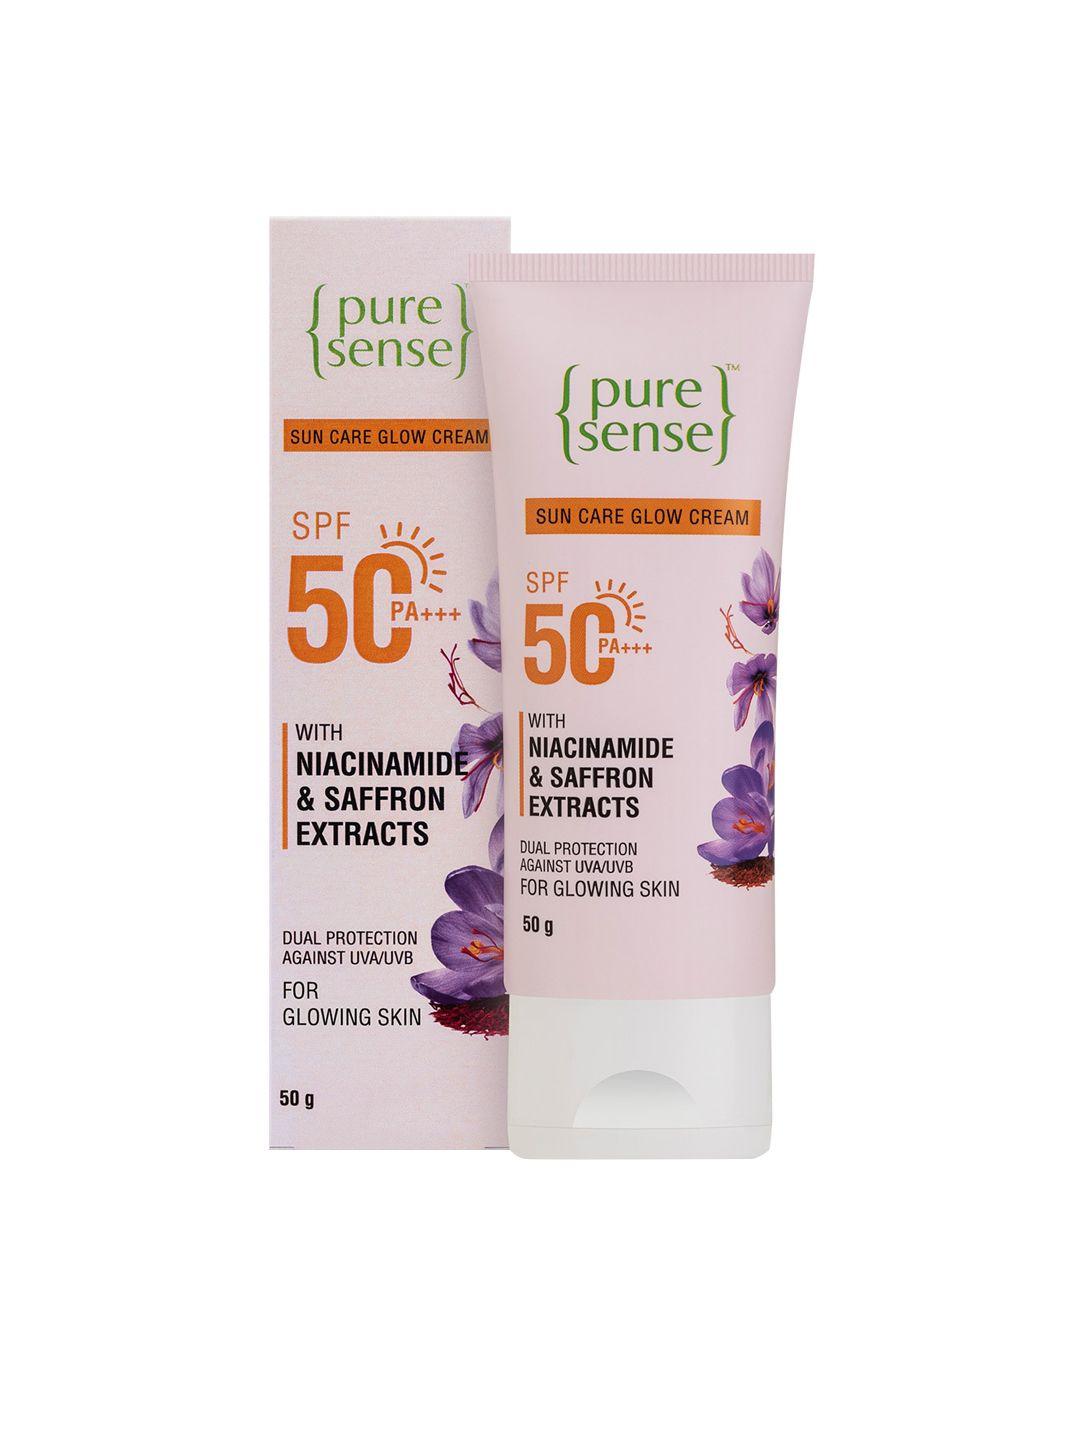 pure sense spf 50 pa +++ sun care glow cream with saffron extracts & niacinamide - 50g